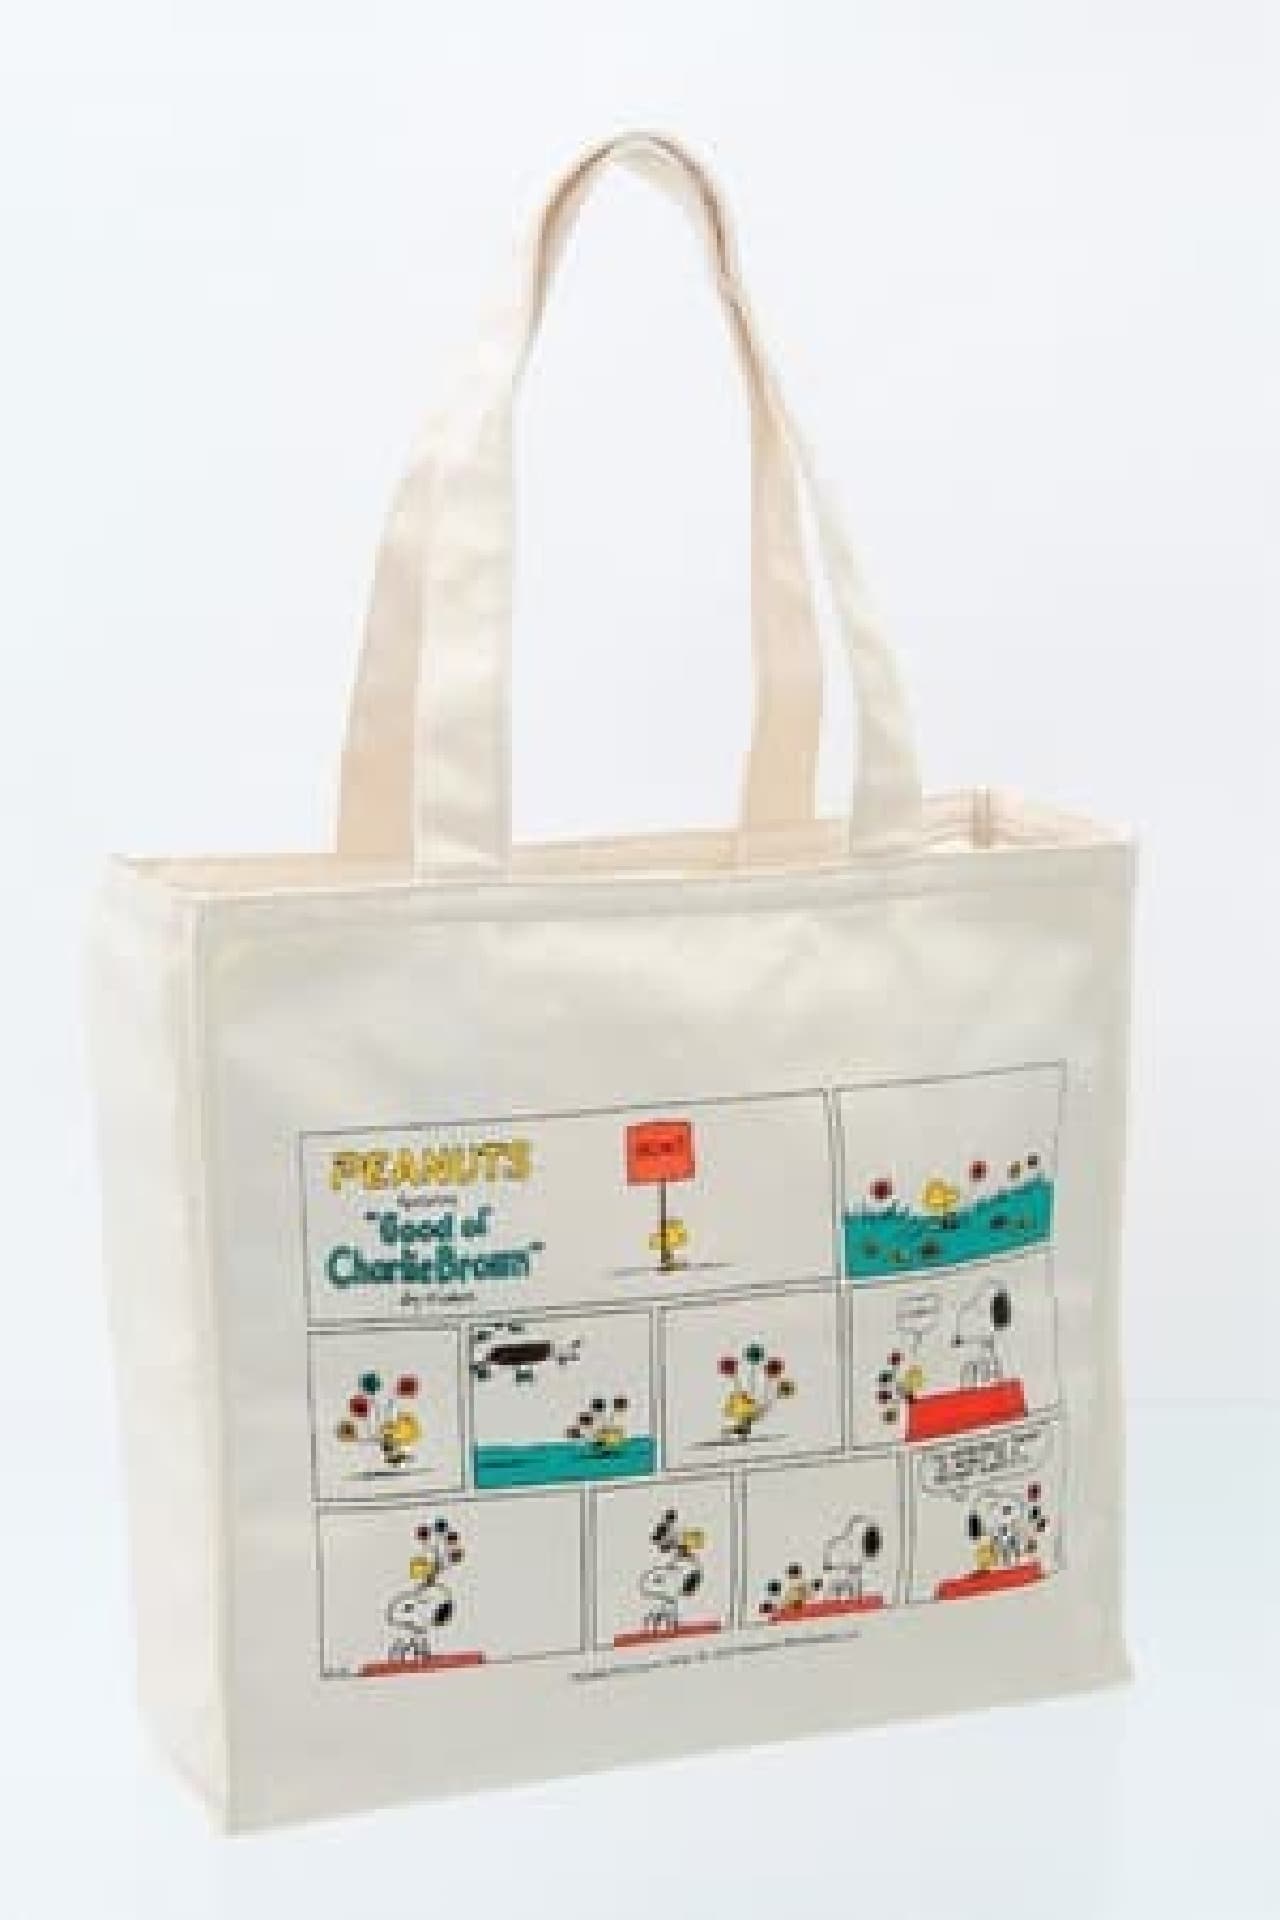 Snoopy's best friend "Woodstock" pattern tote bag included! Complete preservation version mook "WOODSTOCK & SNOOPY"